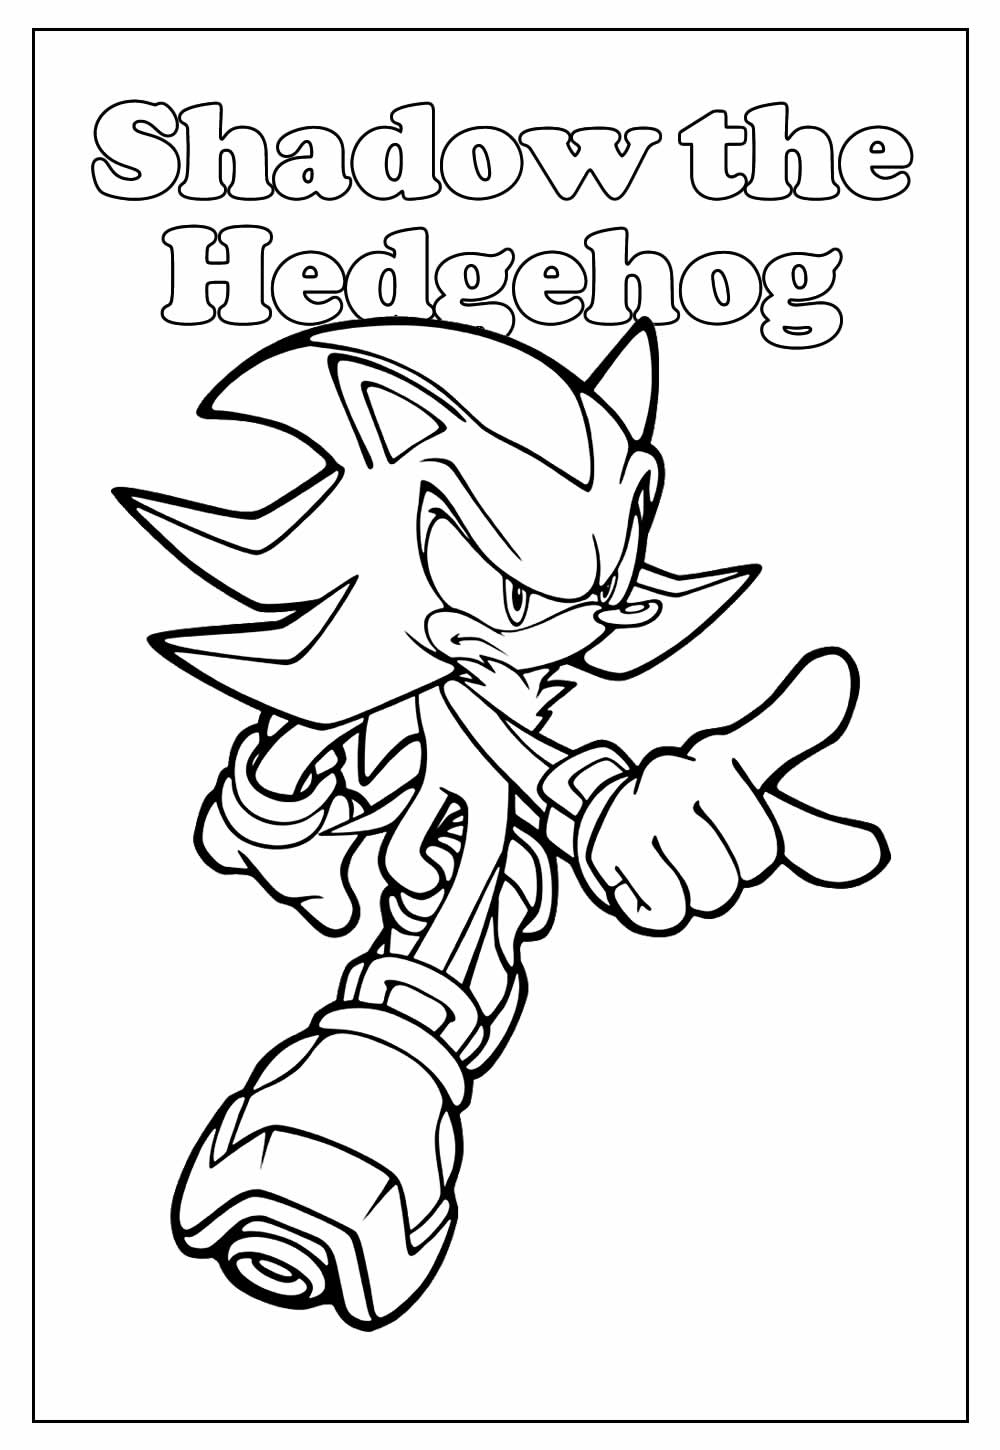 Modelo de Shadow the Hedgehog para colorir